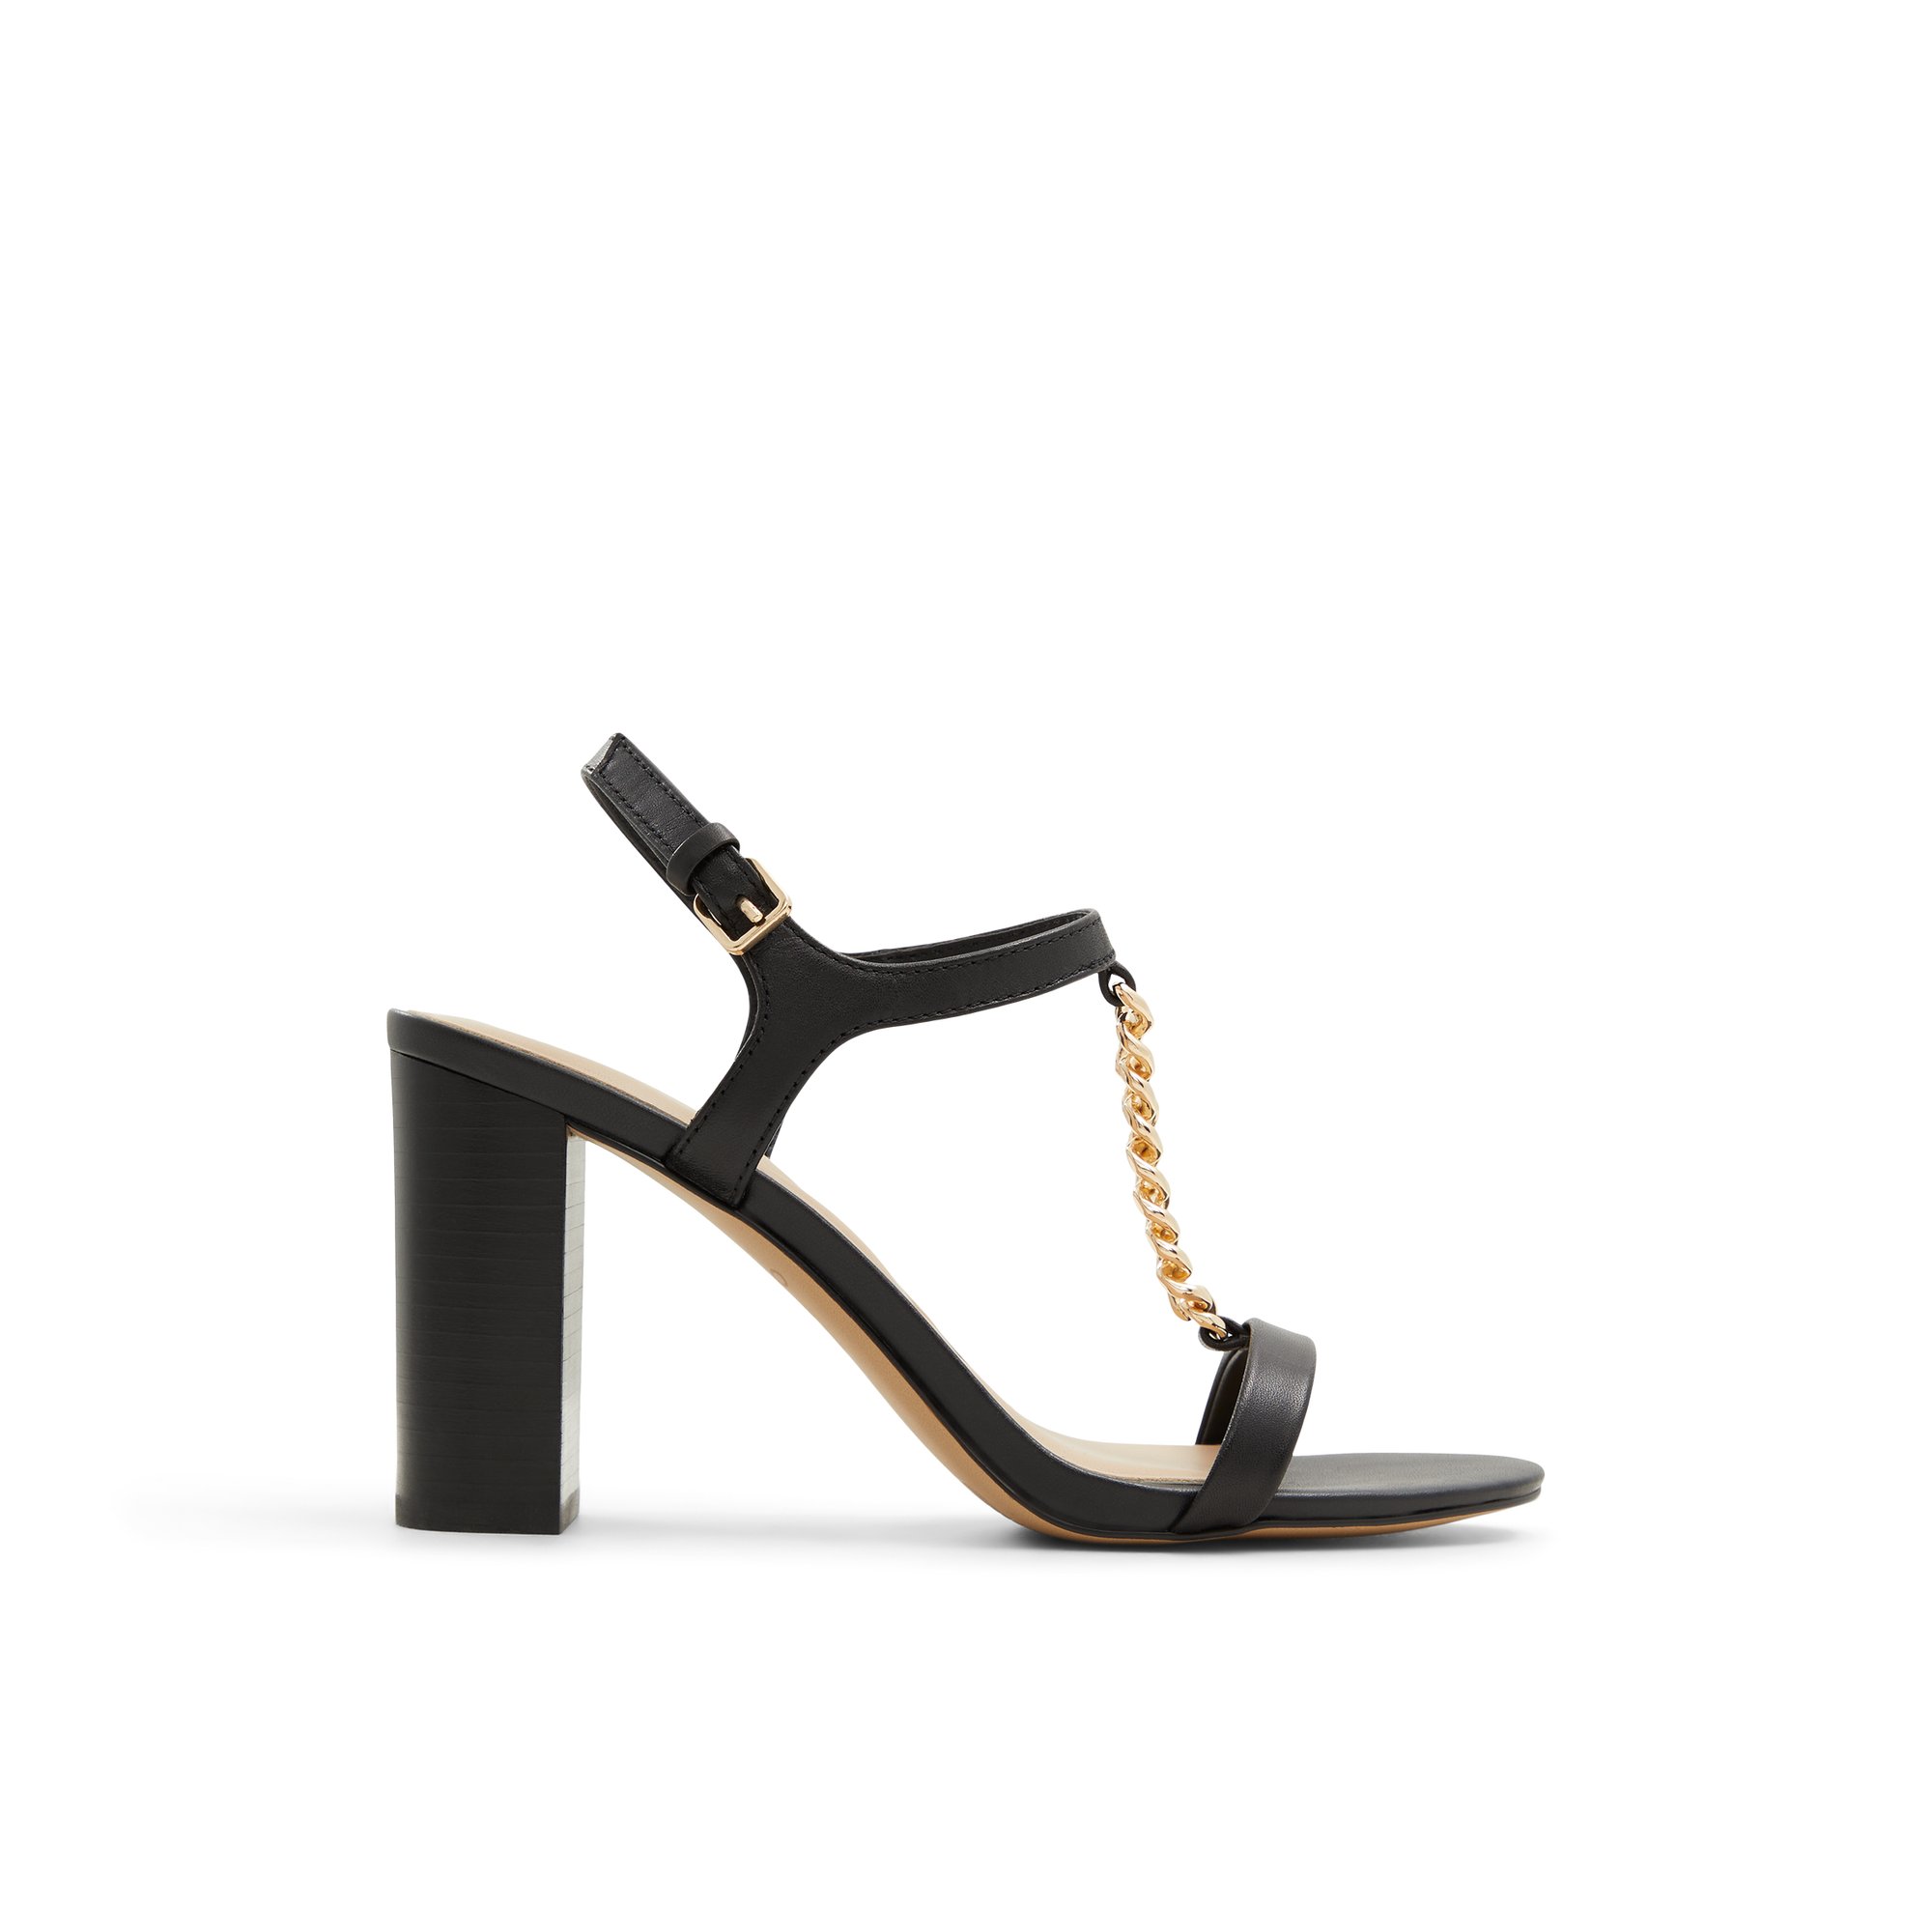 ALDO Clelia - Women's Strappy Sandal Sandals - Black